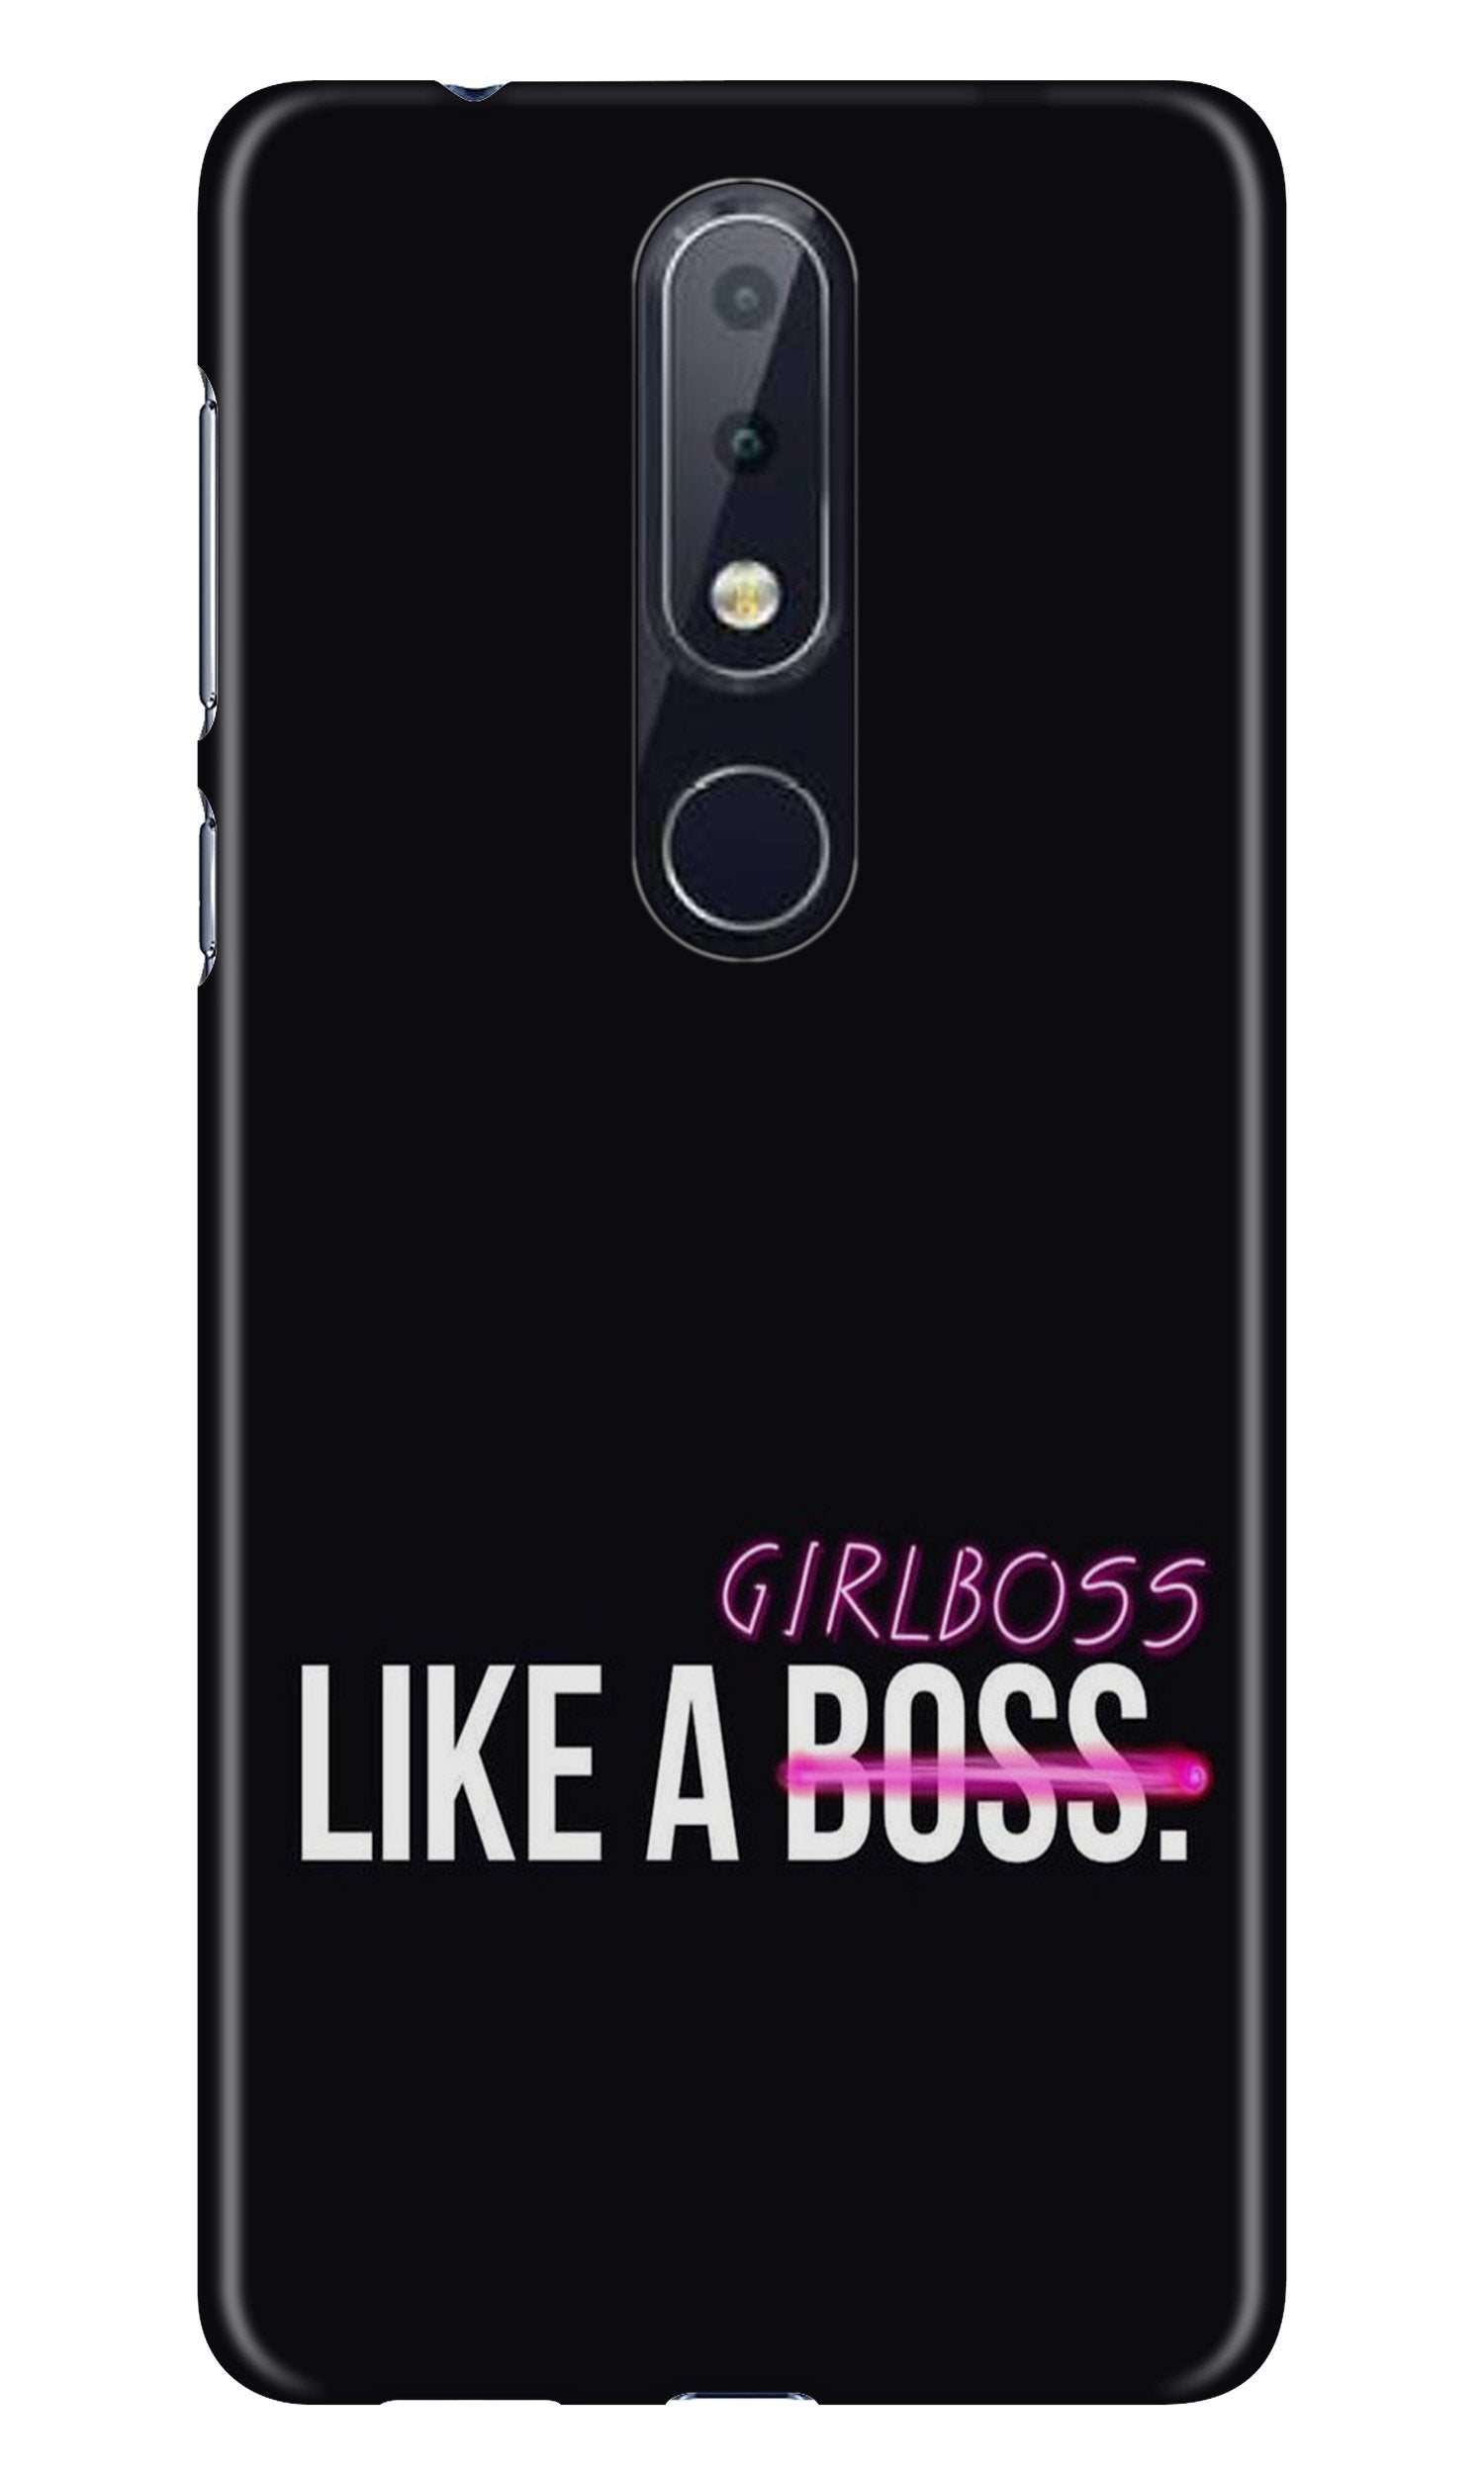 Like a Girl Boss Case for Nokia 4.2 (Design No. 265)